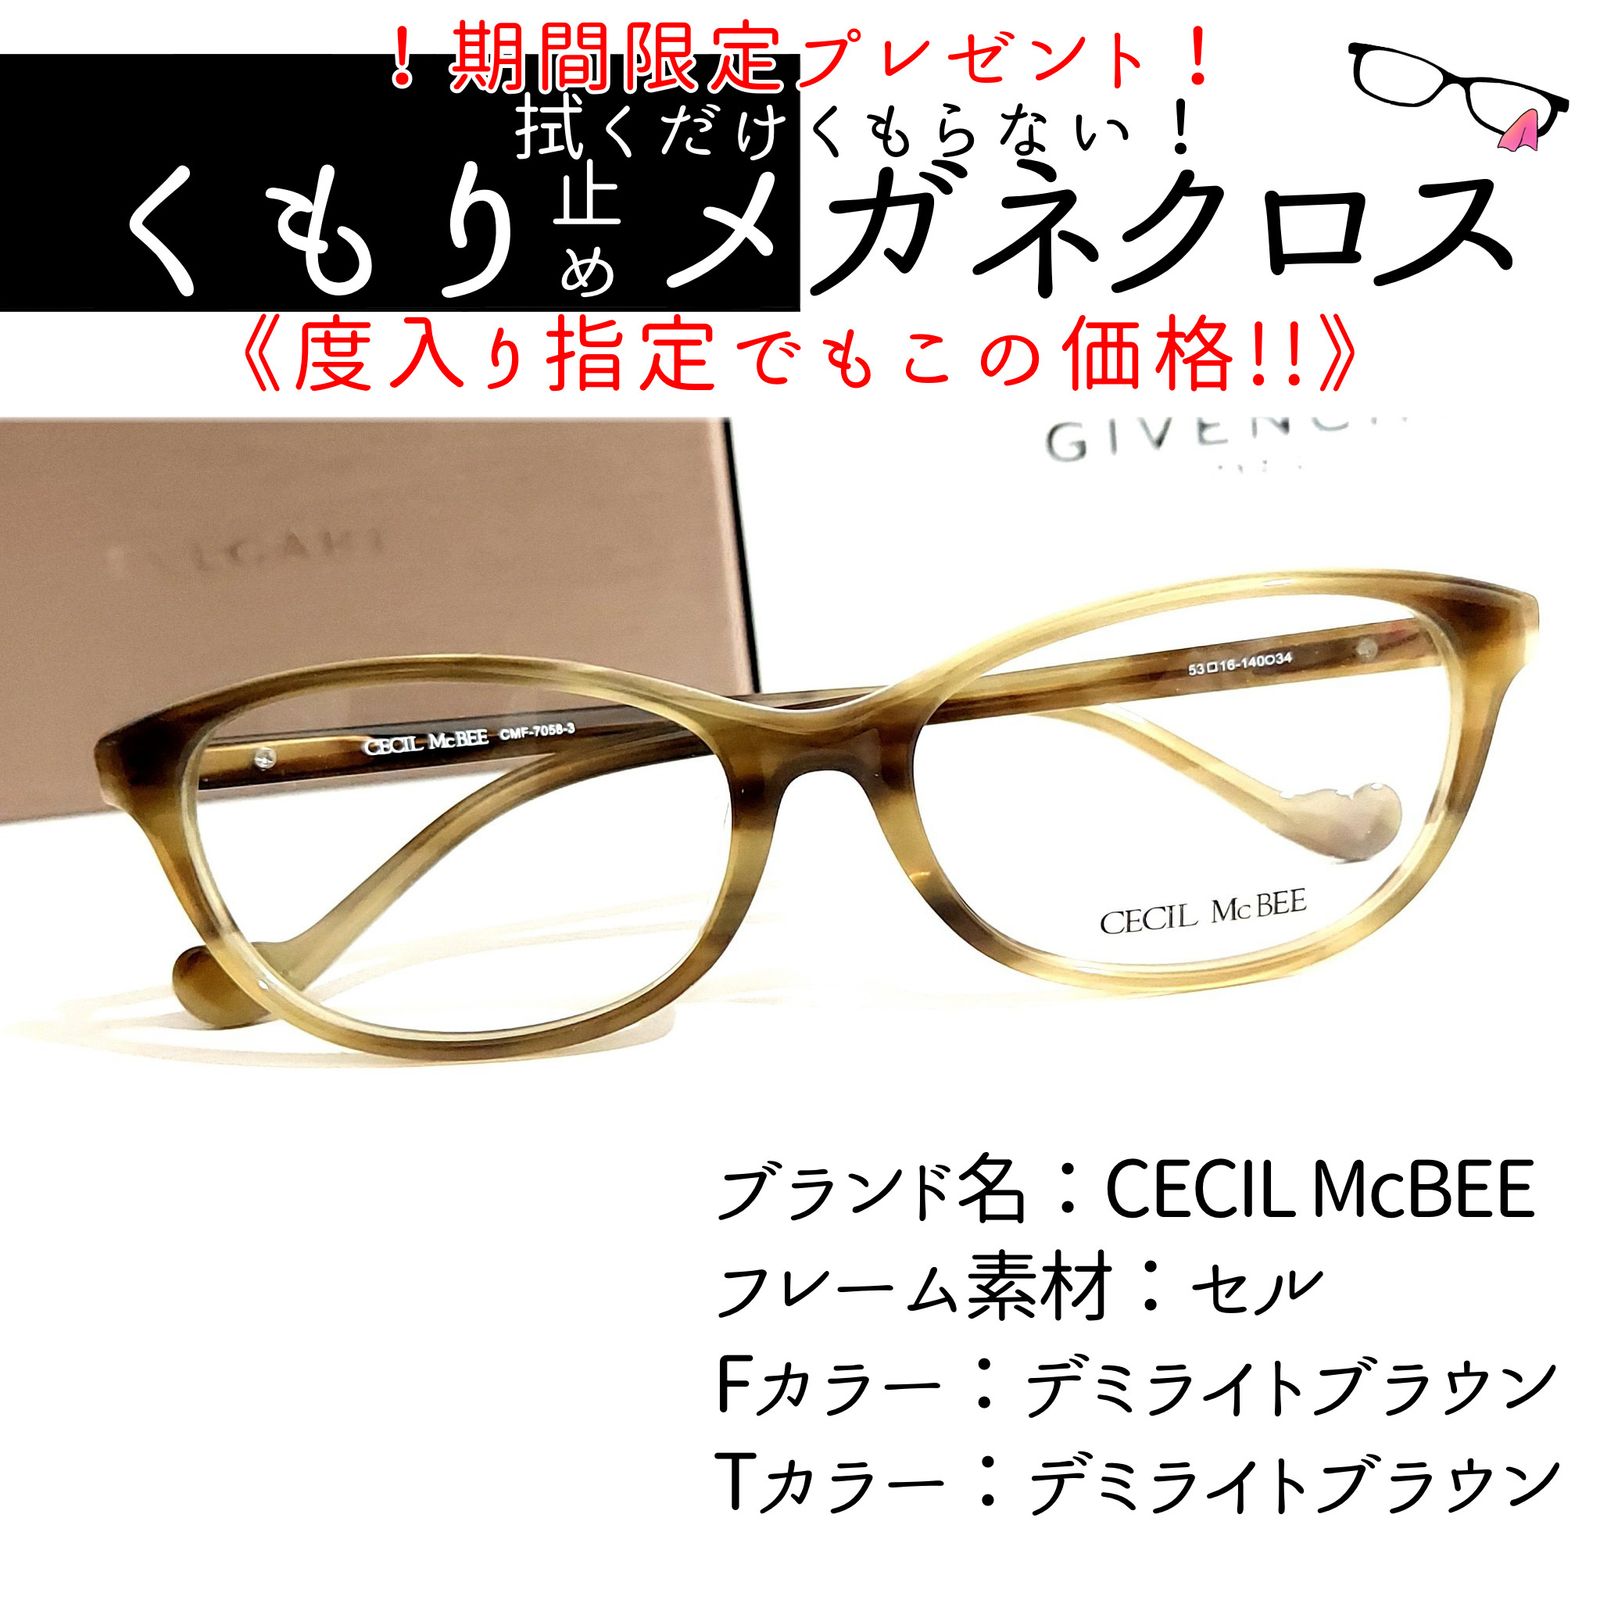 No.2014+メガネ CECIL McBEE【度数入り込み価格】 | www